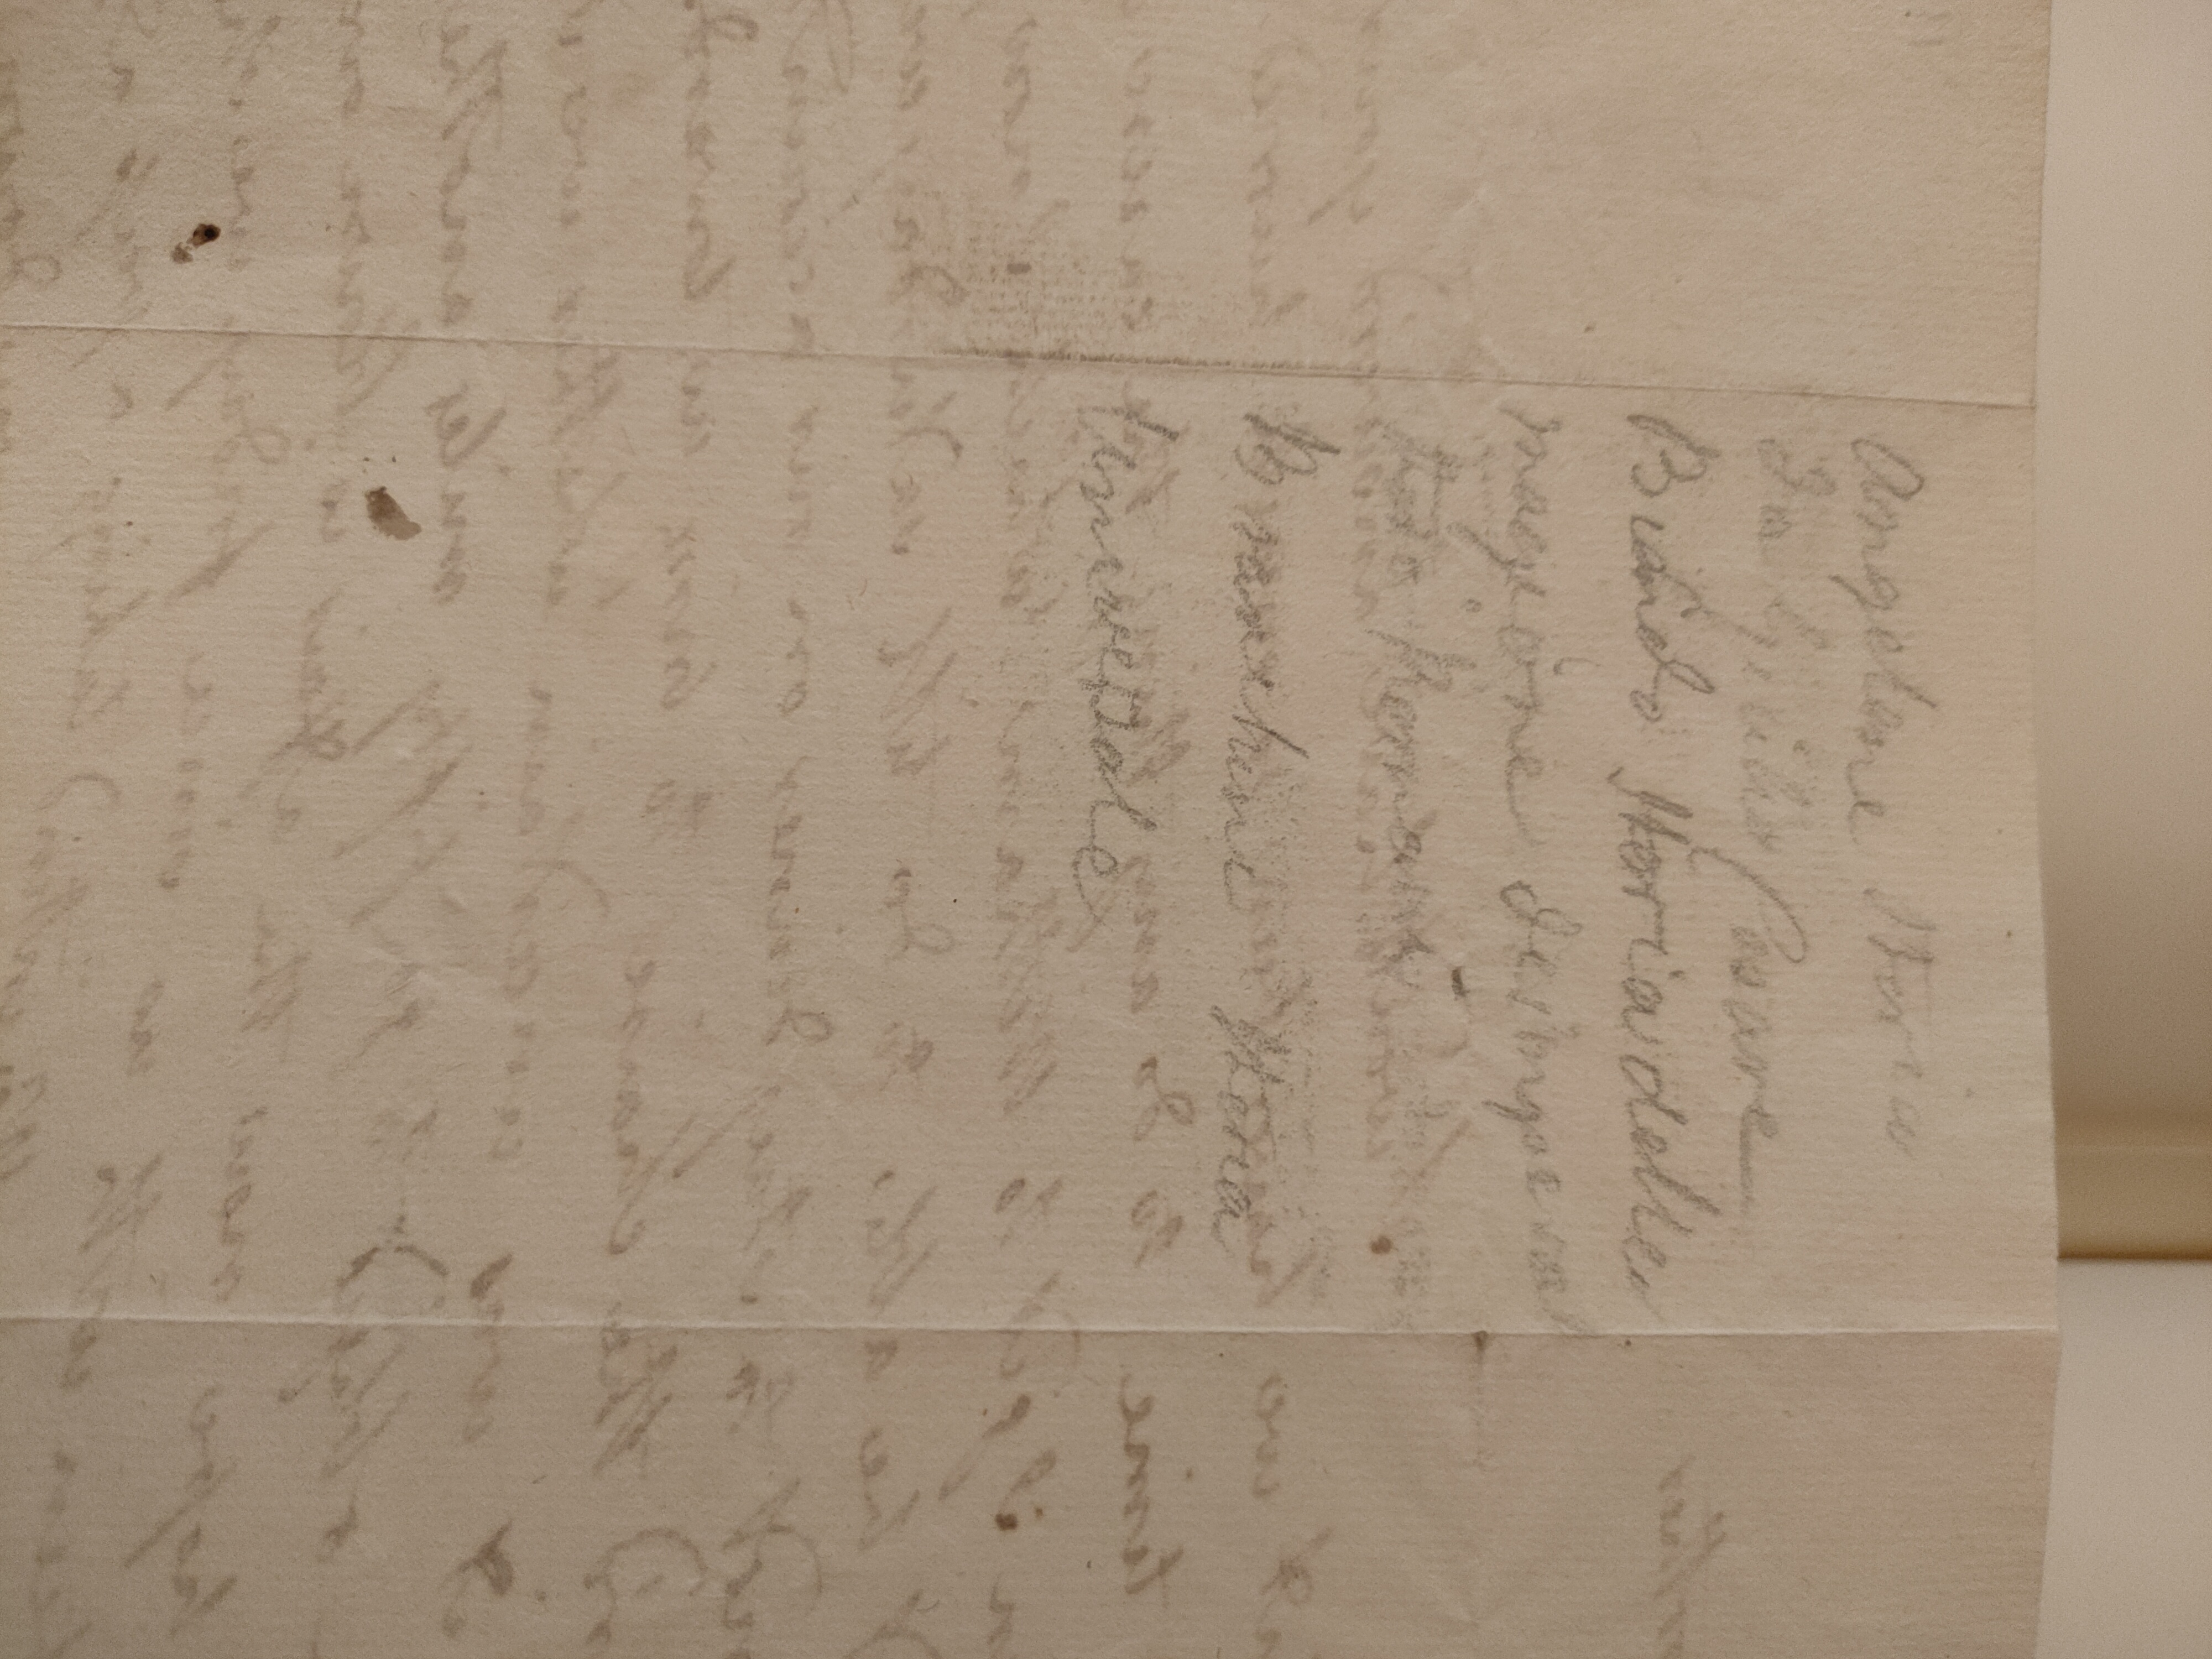 Image #2 of letter: Robert Augustus Johnson to George William Johnson